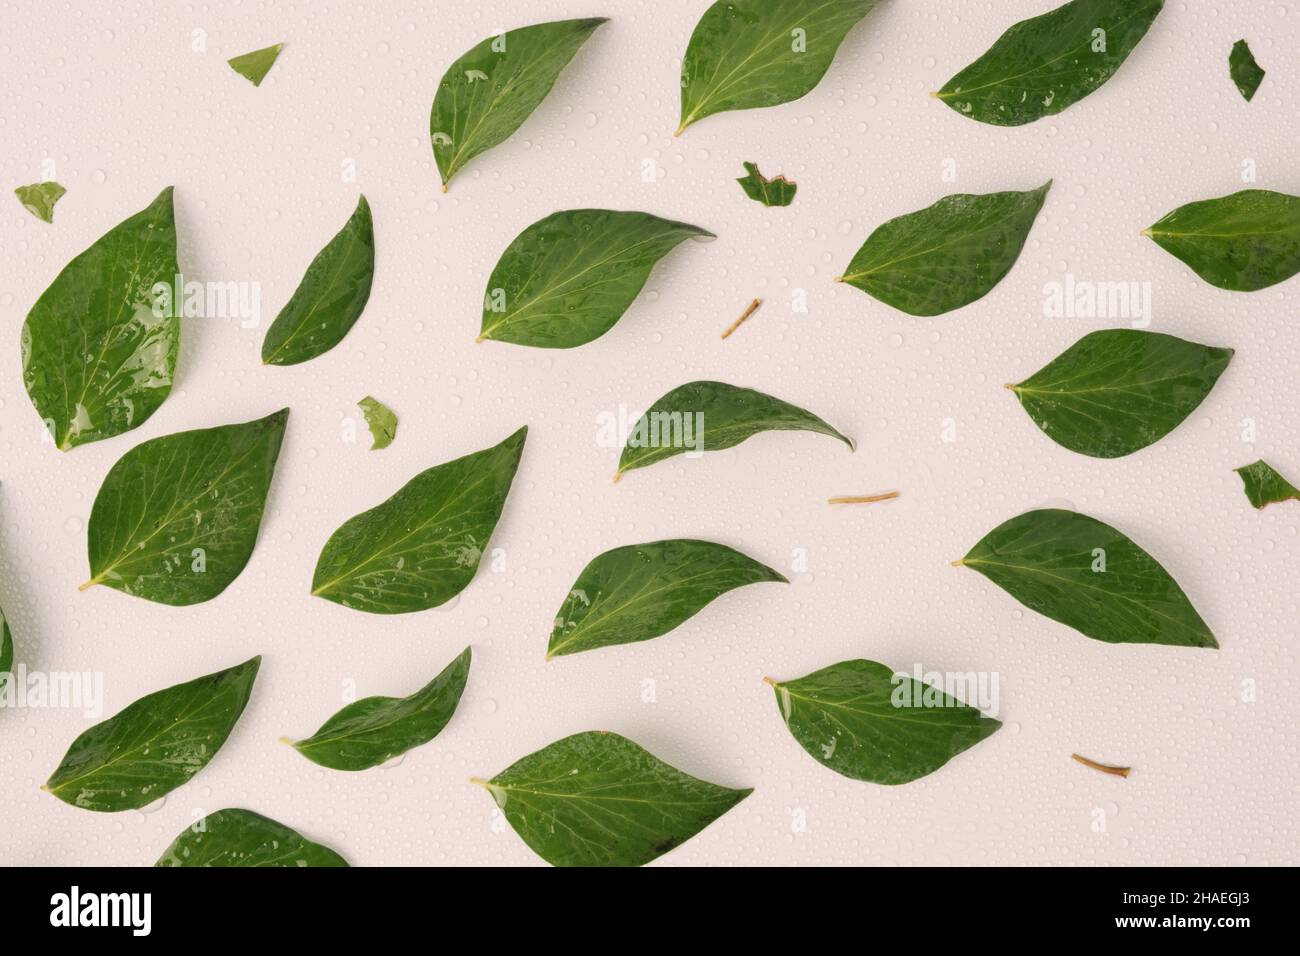 Wet green leaves arranged diagonally symbolizing wind force on a white background. Natural minimal background. Stock Photo